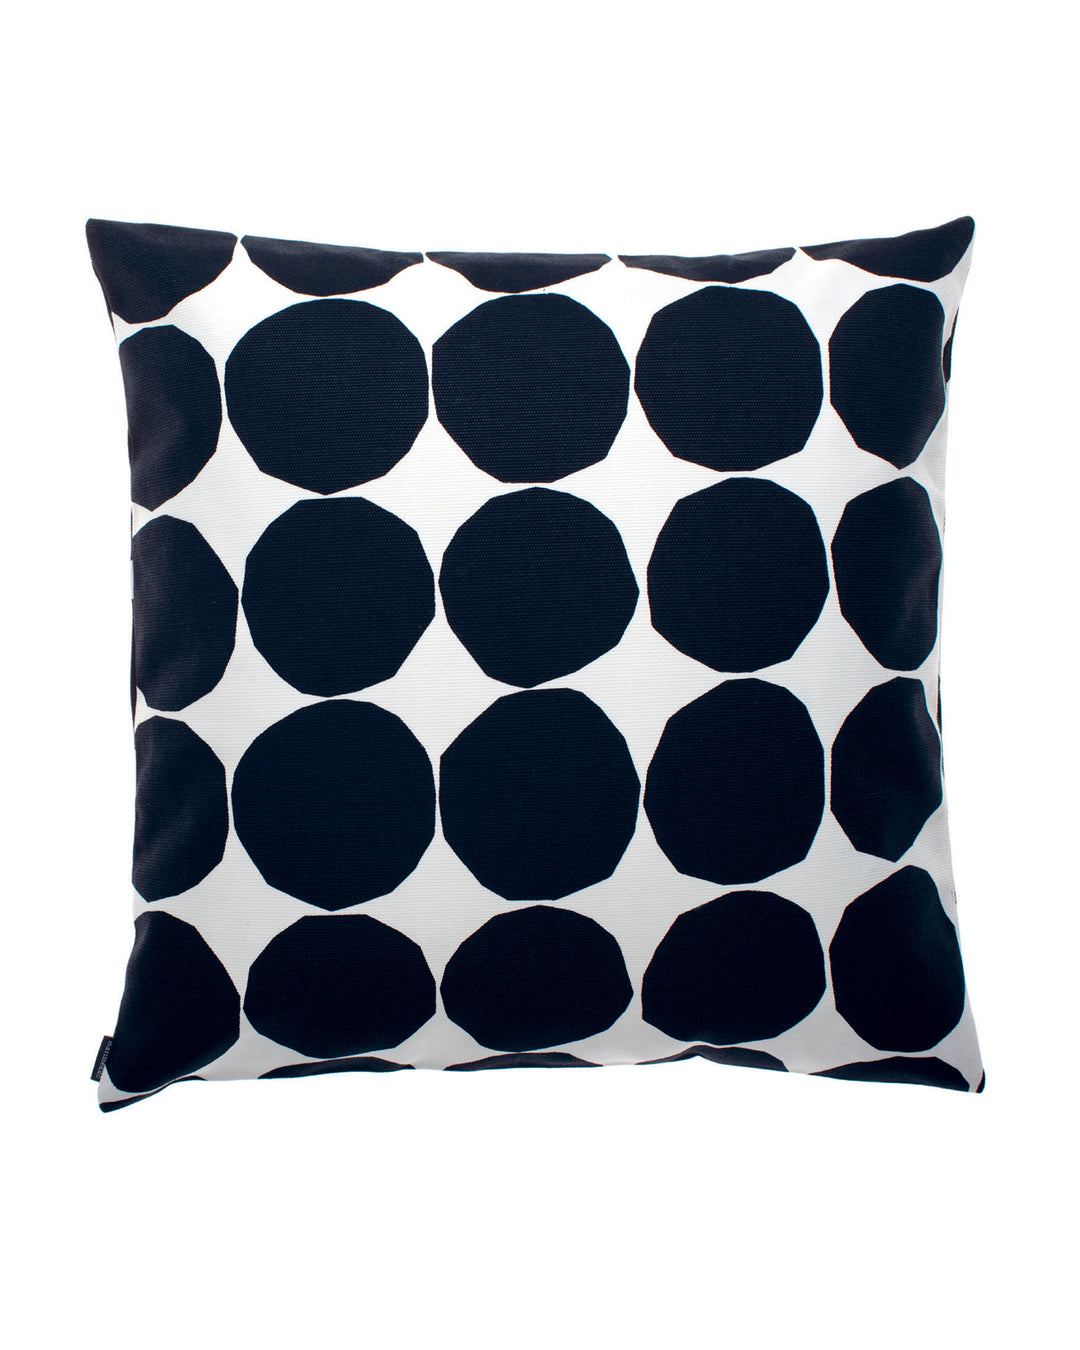 Pienet Kivet Cushion Cover, Black/White 20 x 20